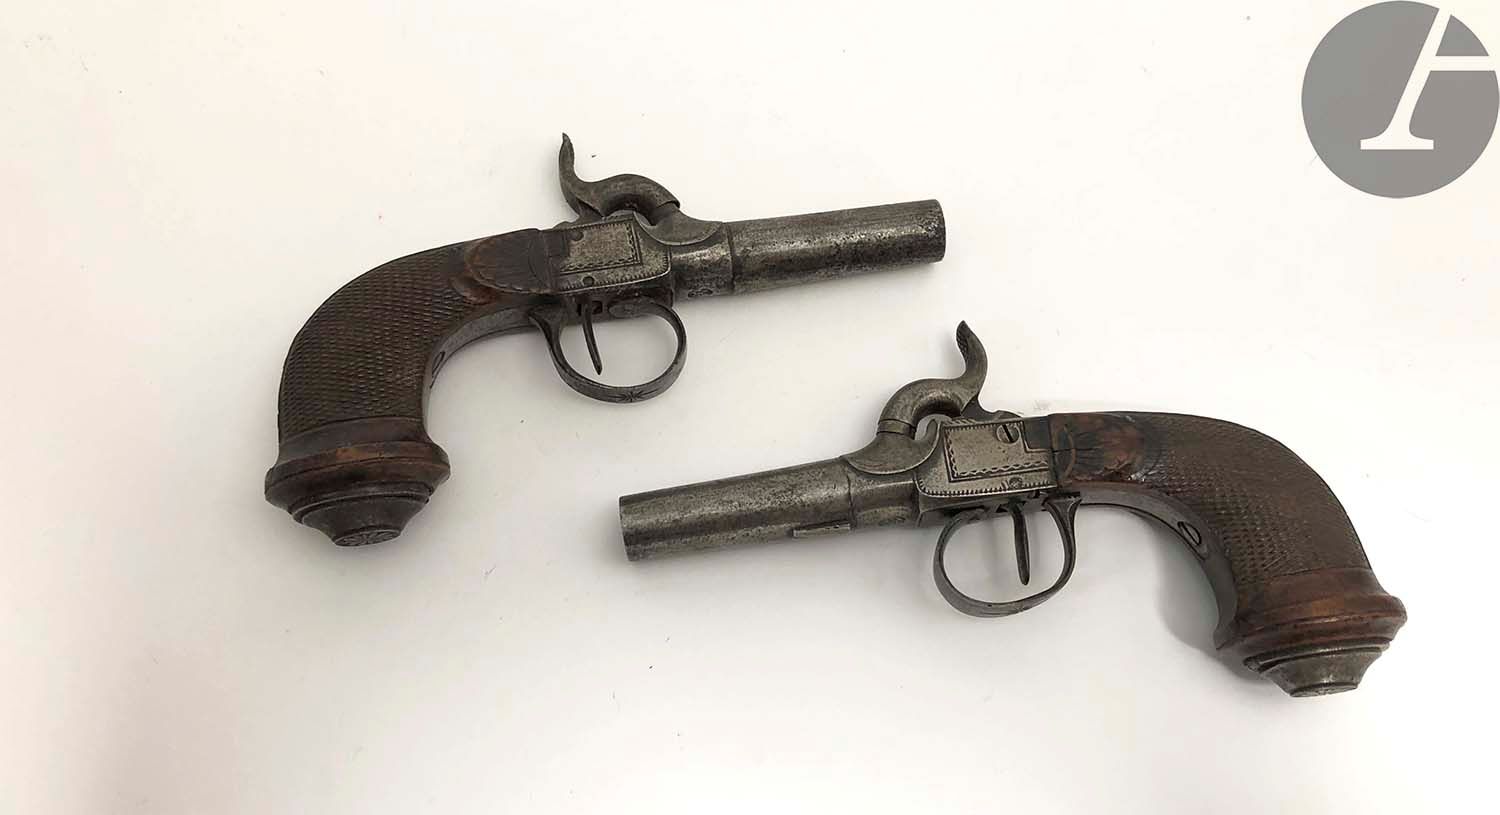 Null 一对打击式手枪。
圆形枪管，带强迫性子弹。雕刻的胸部和扳机防护装置。雕花和方形的胡桃木股。
A.B.E. 大约1840/1850。